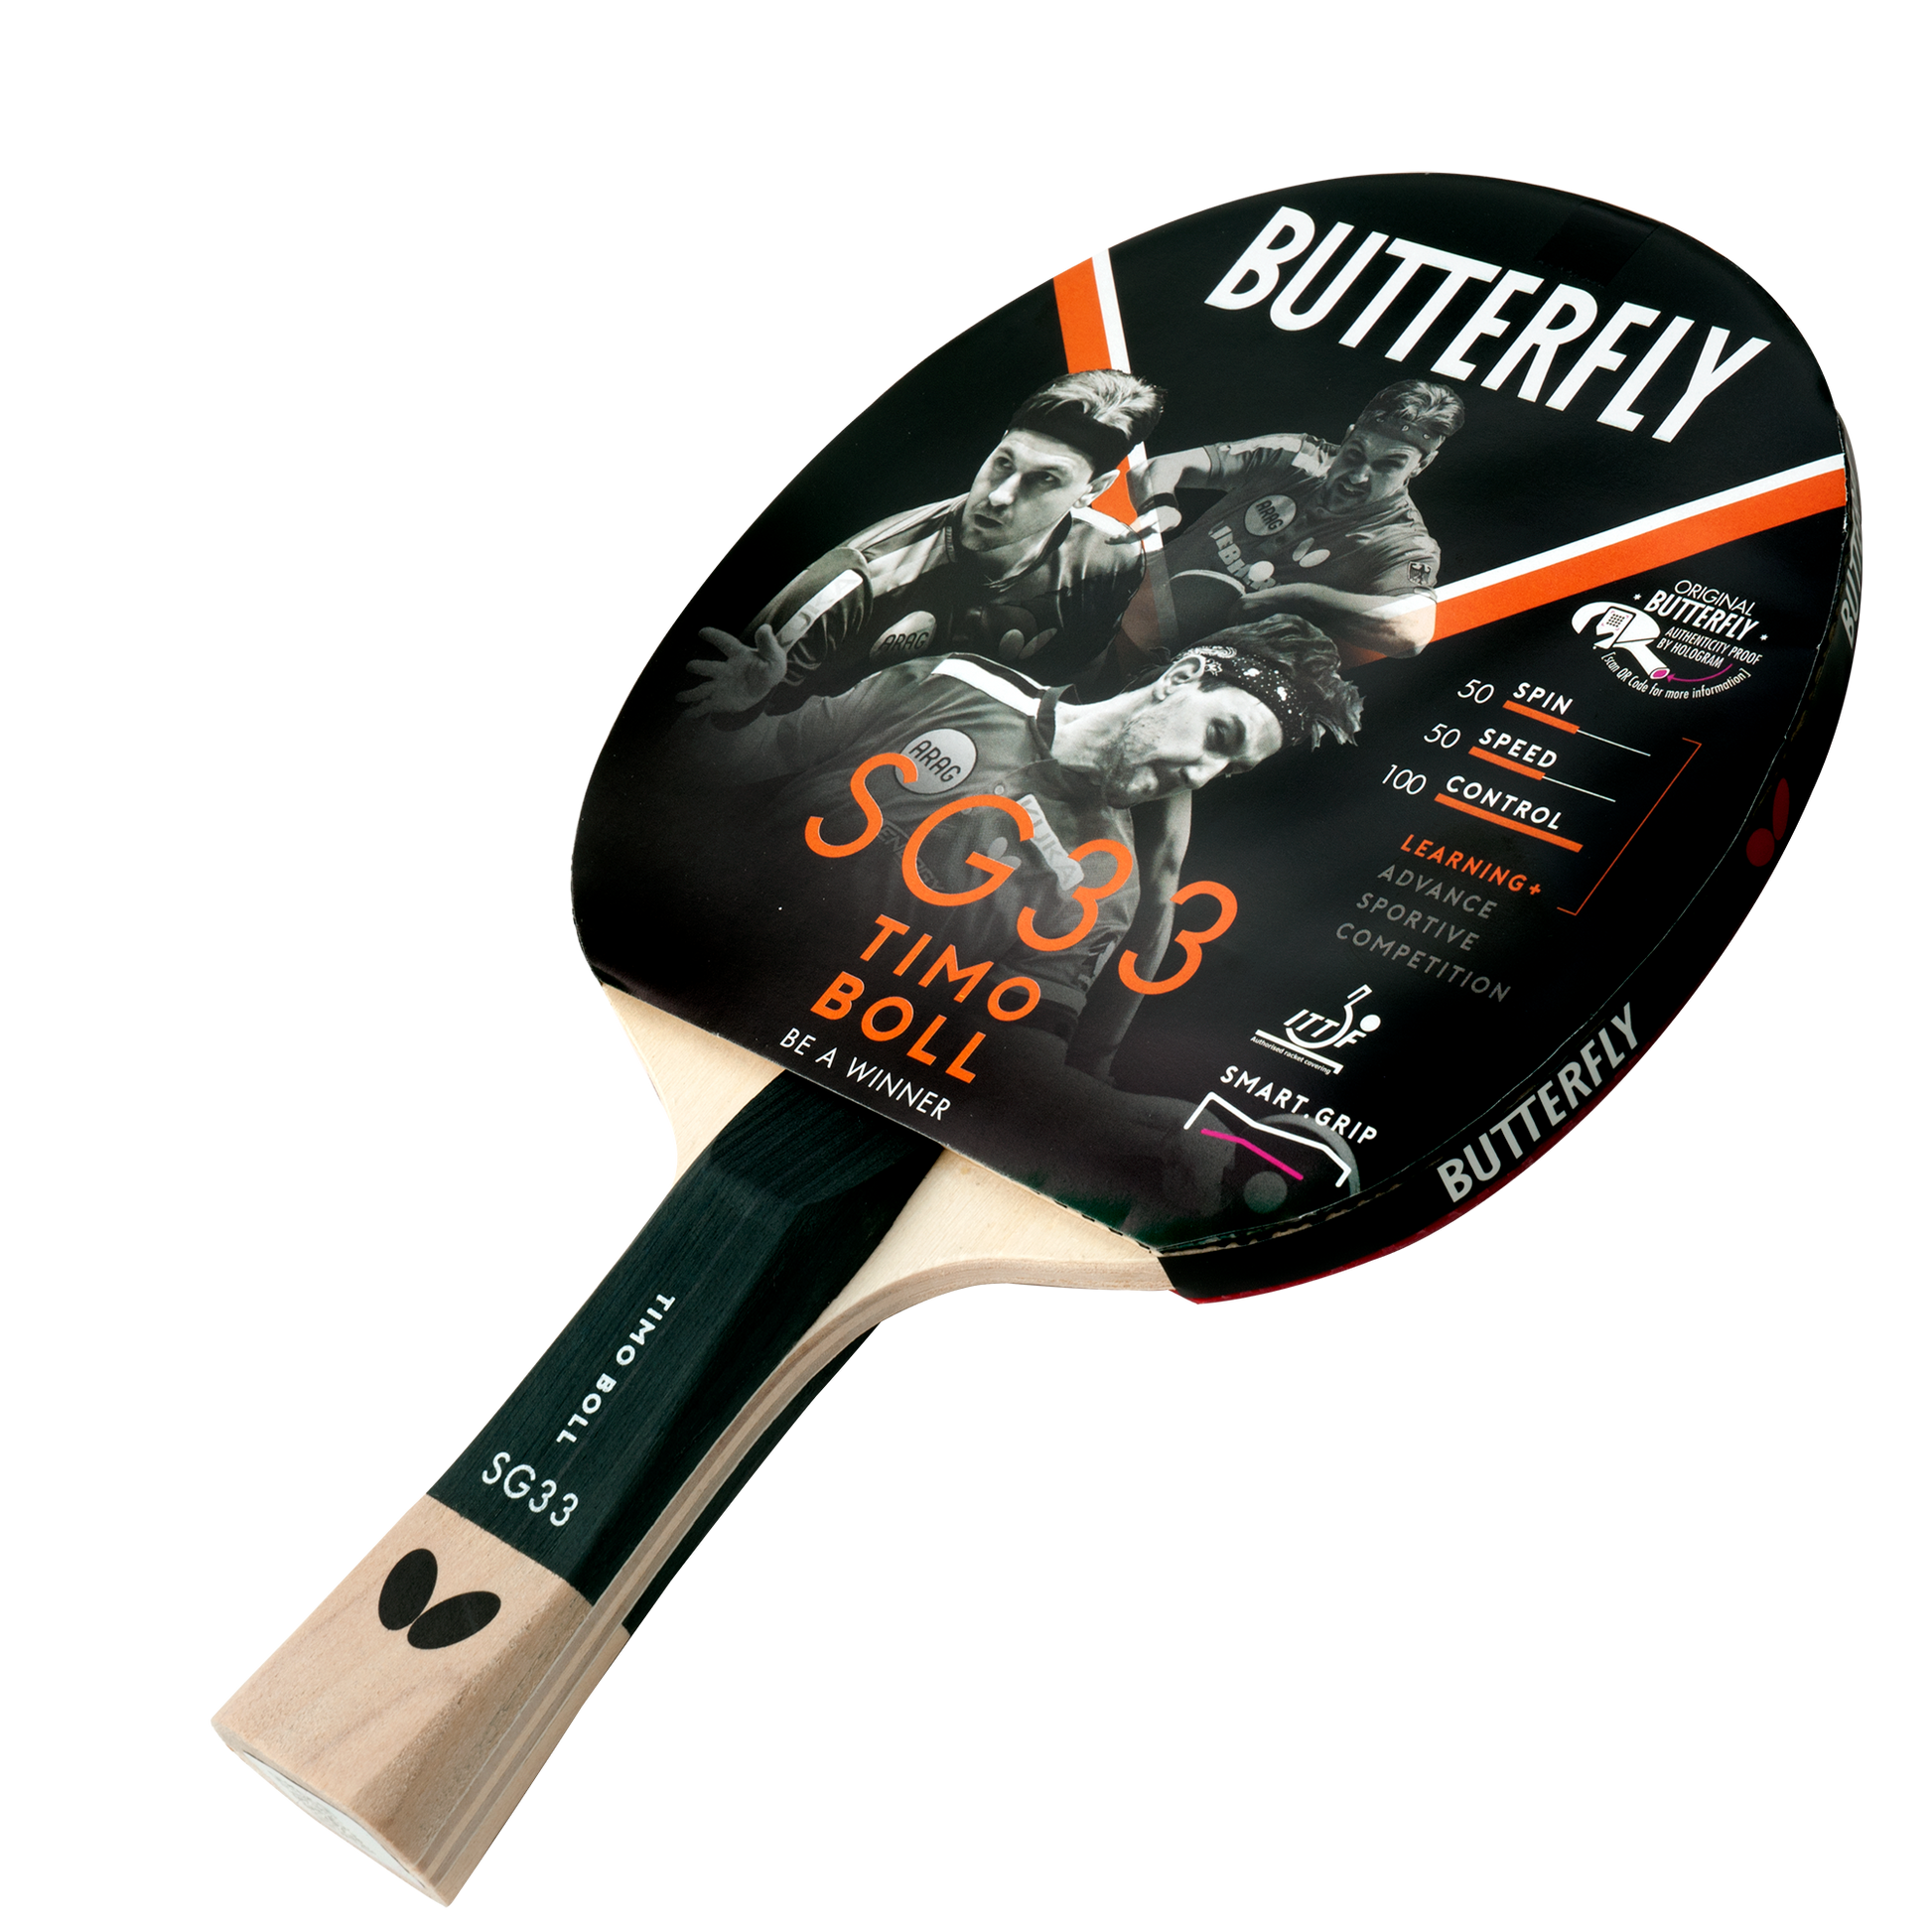 Butterfly Timo Boll SG33 Table Tennis Bat